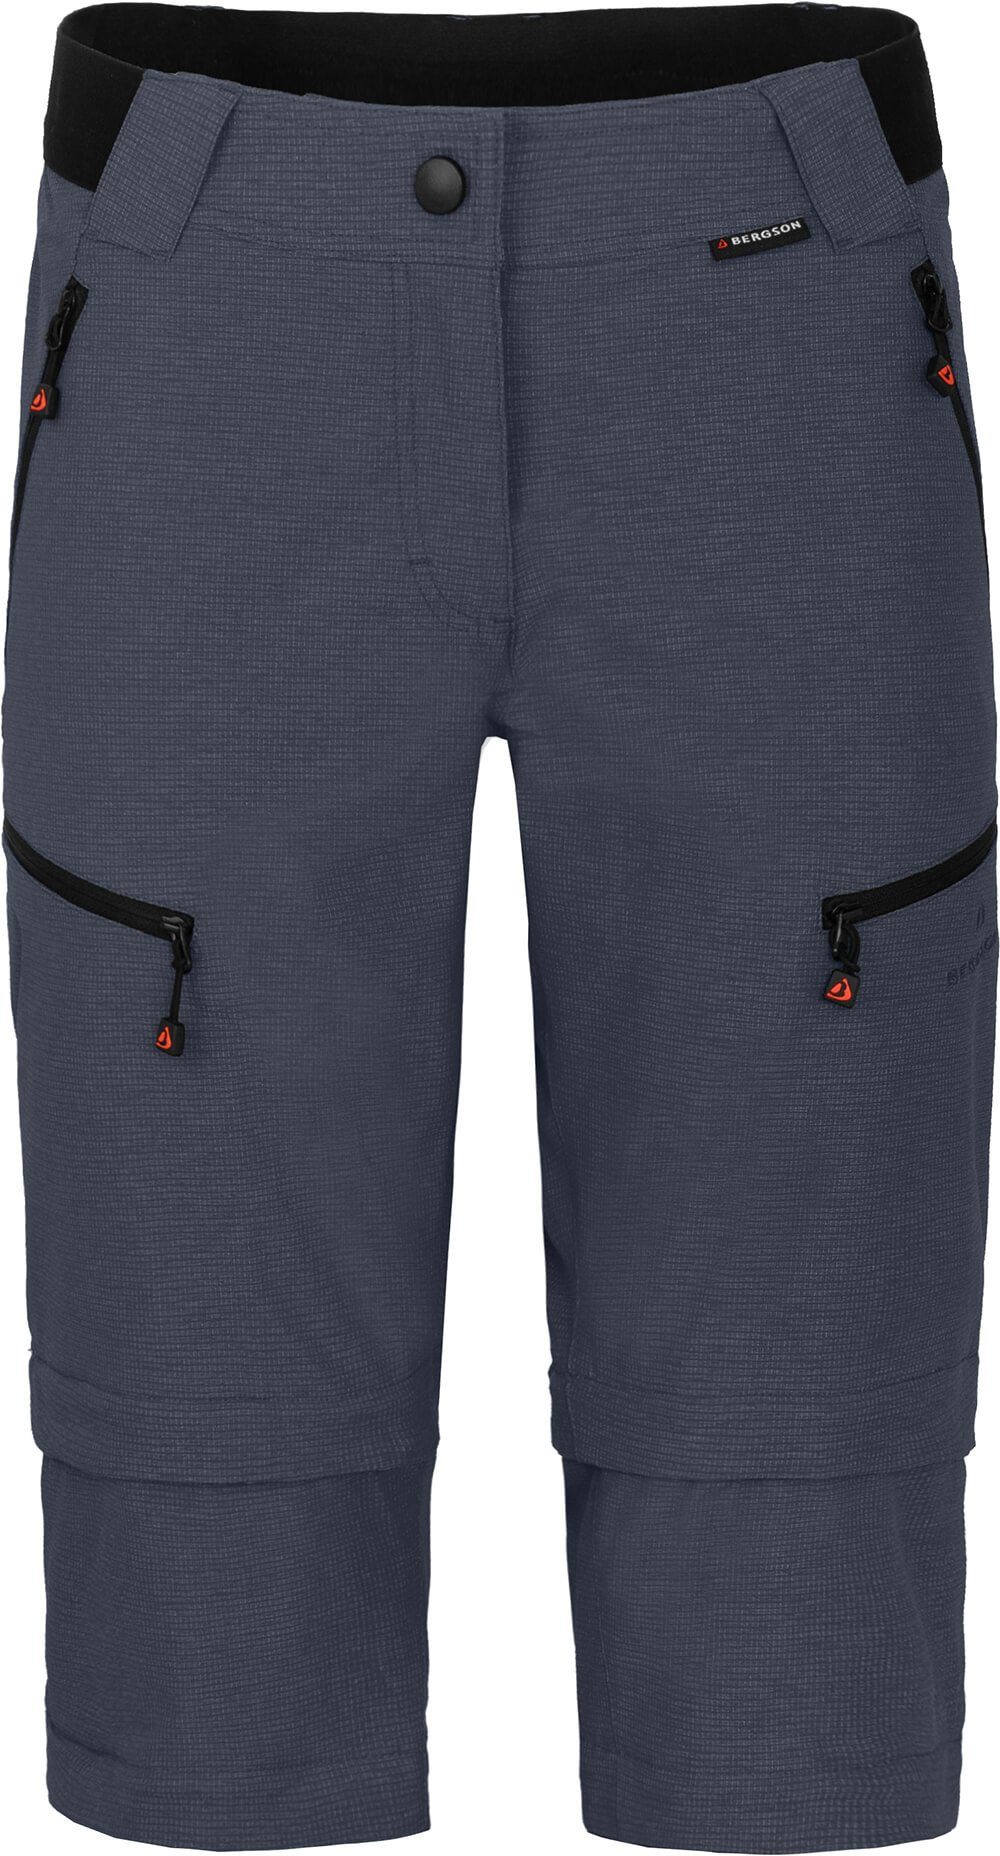 Zip-off-Hose elastisch, mit Doppel robust Zipp-Off Damen Wanderhose, grau/blau Normalgrößen, T-ZIPP Bergson PORI